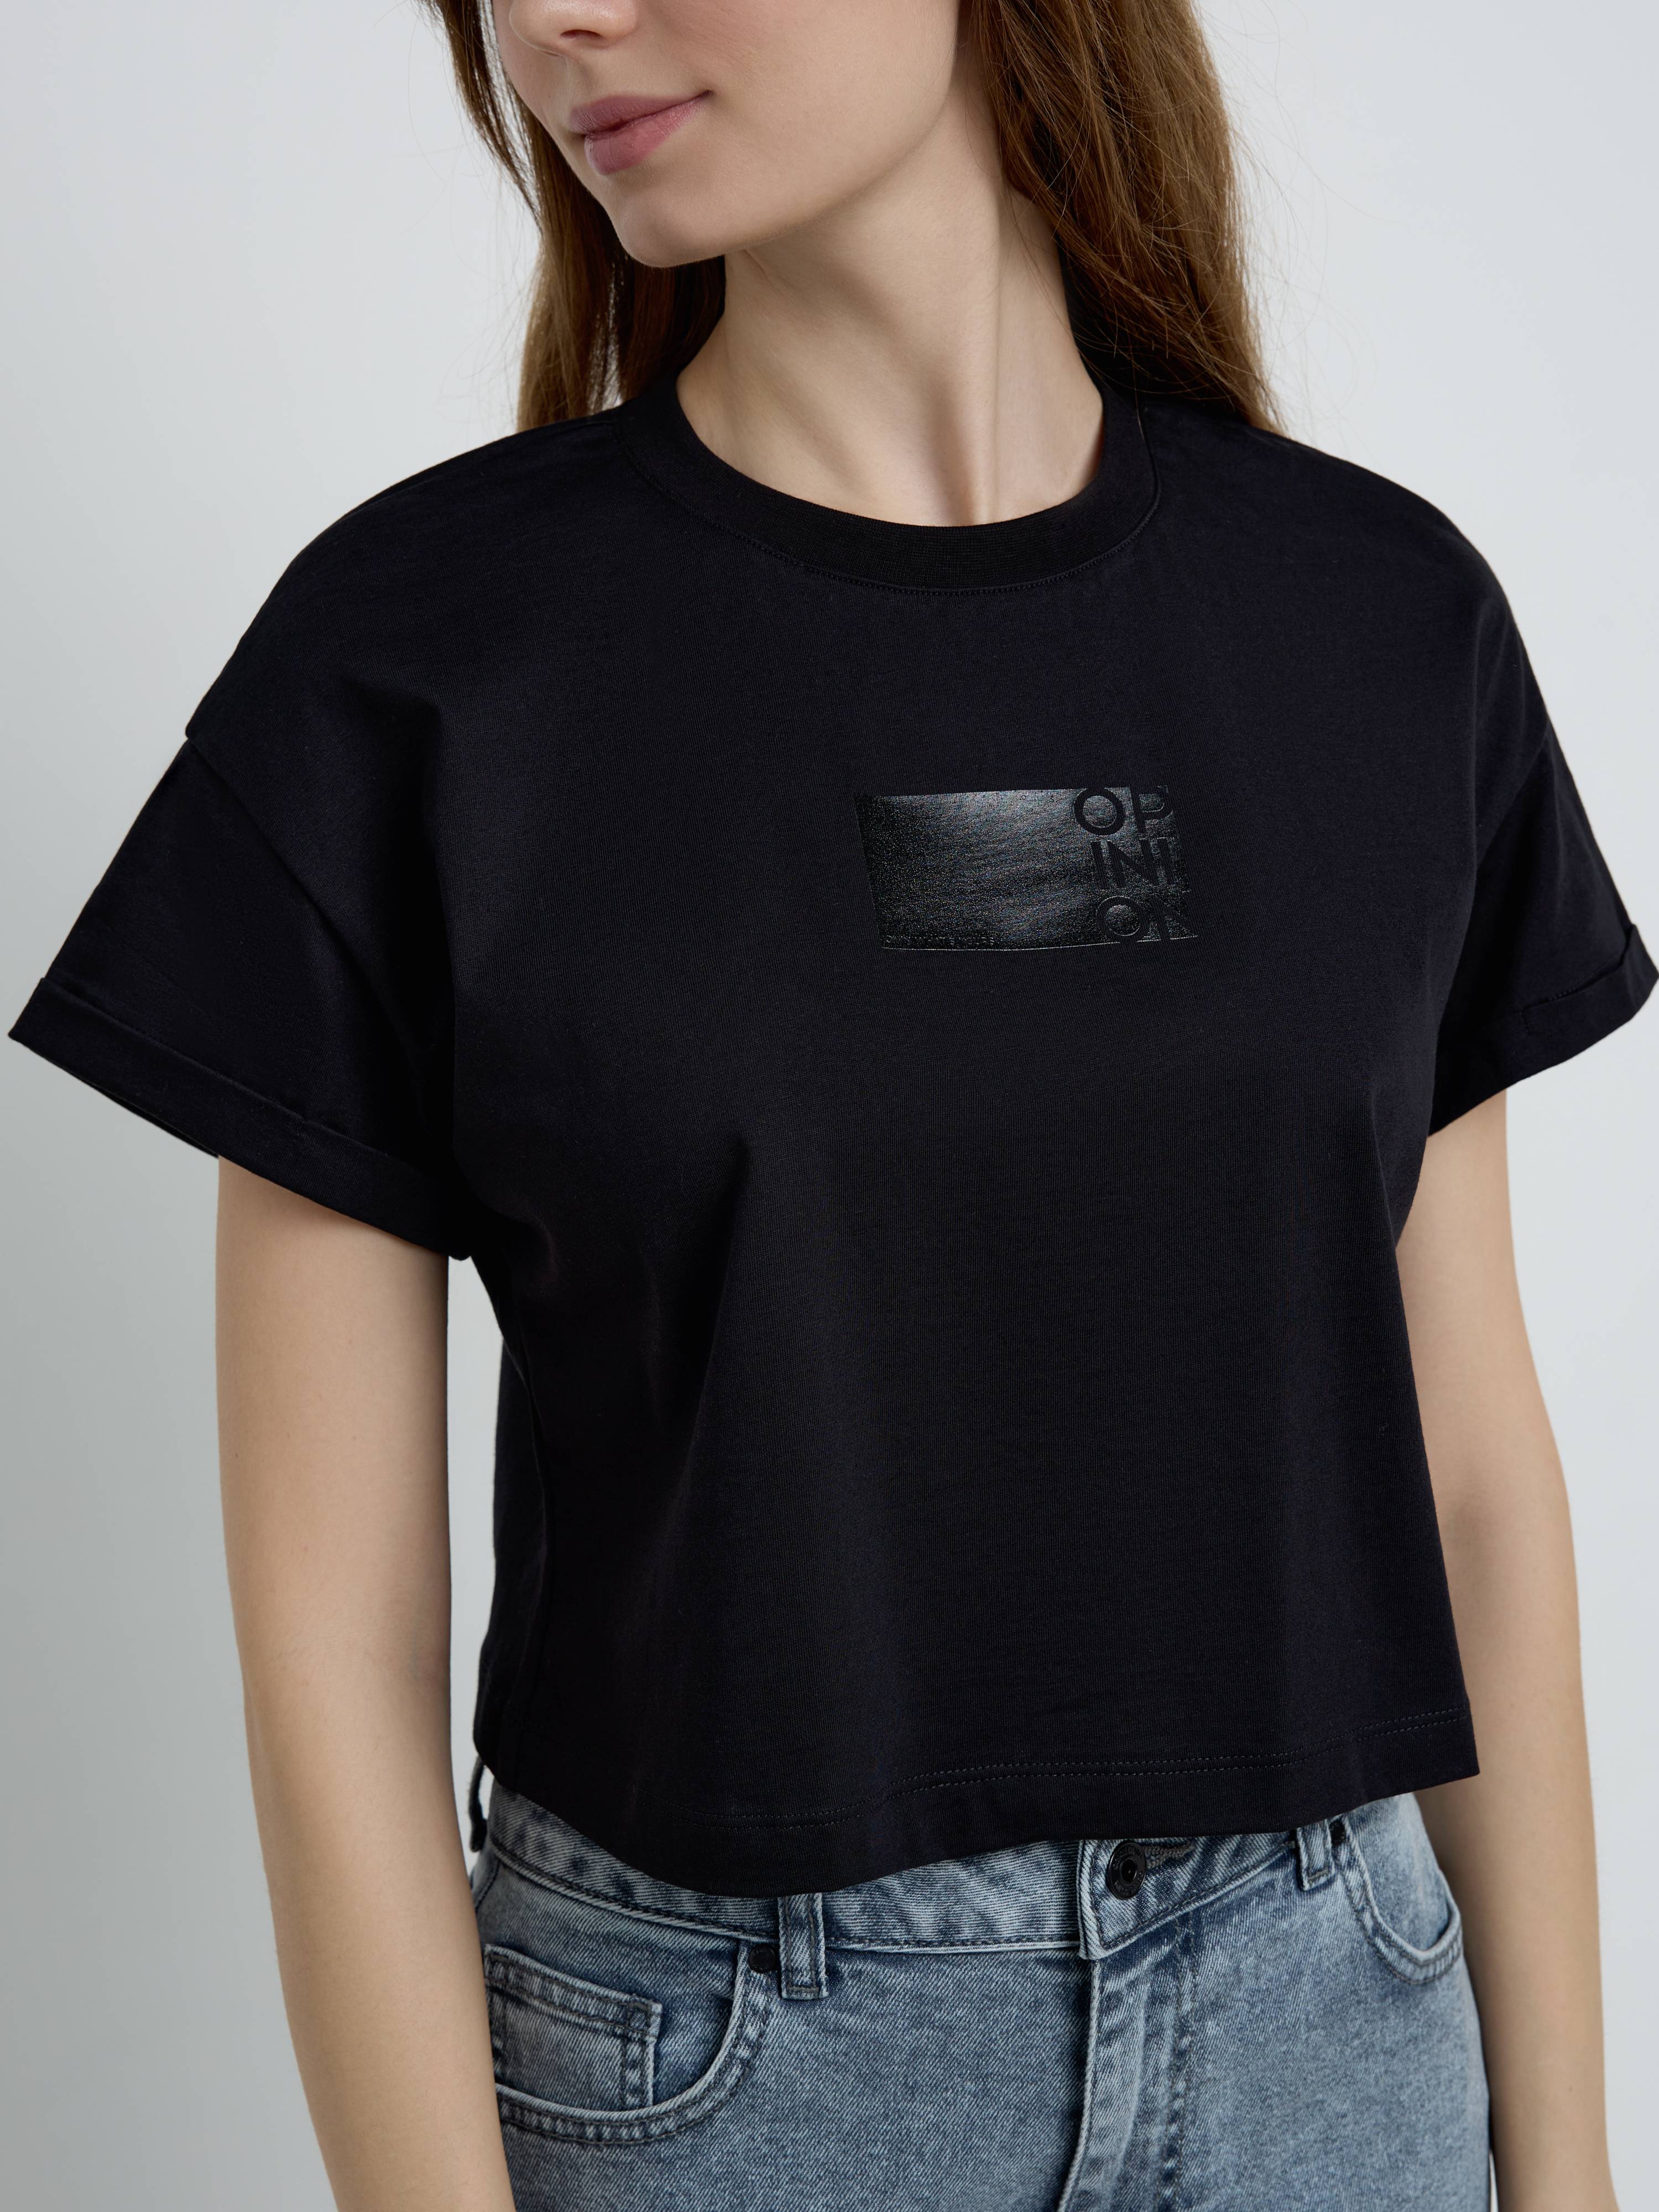 Укороченная футболка из хлопка с рисунком «Opinion» LD 2151 Conte ⭐️, цвет black, размер 170-84/xs - фото 1